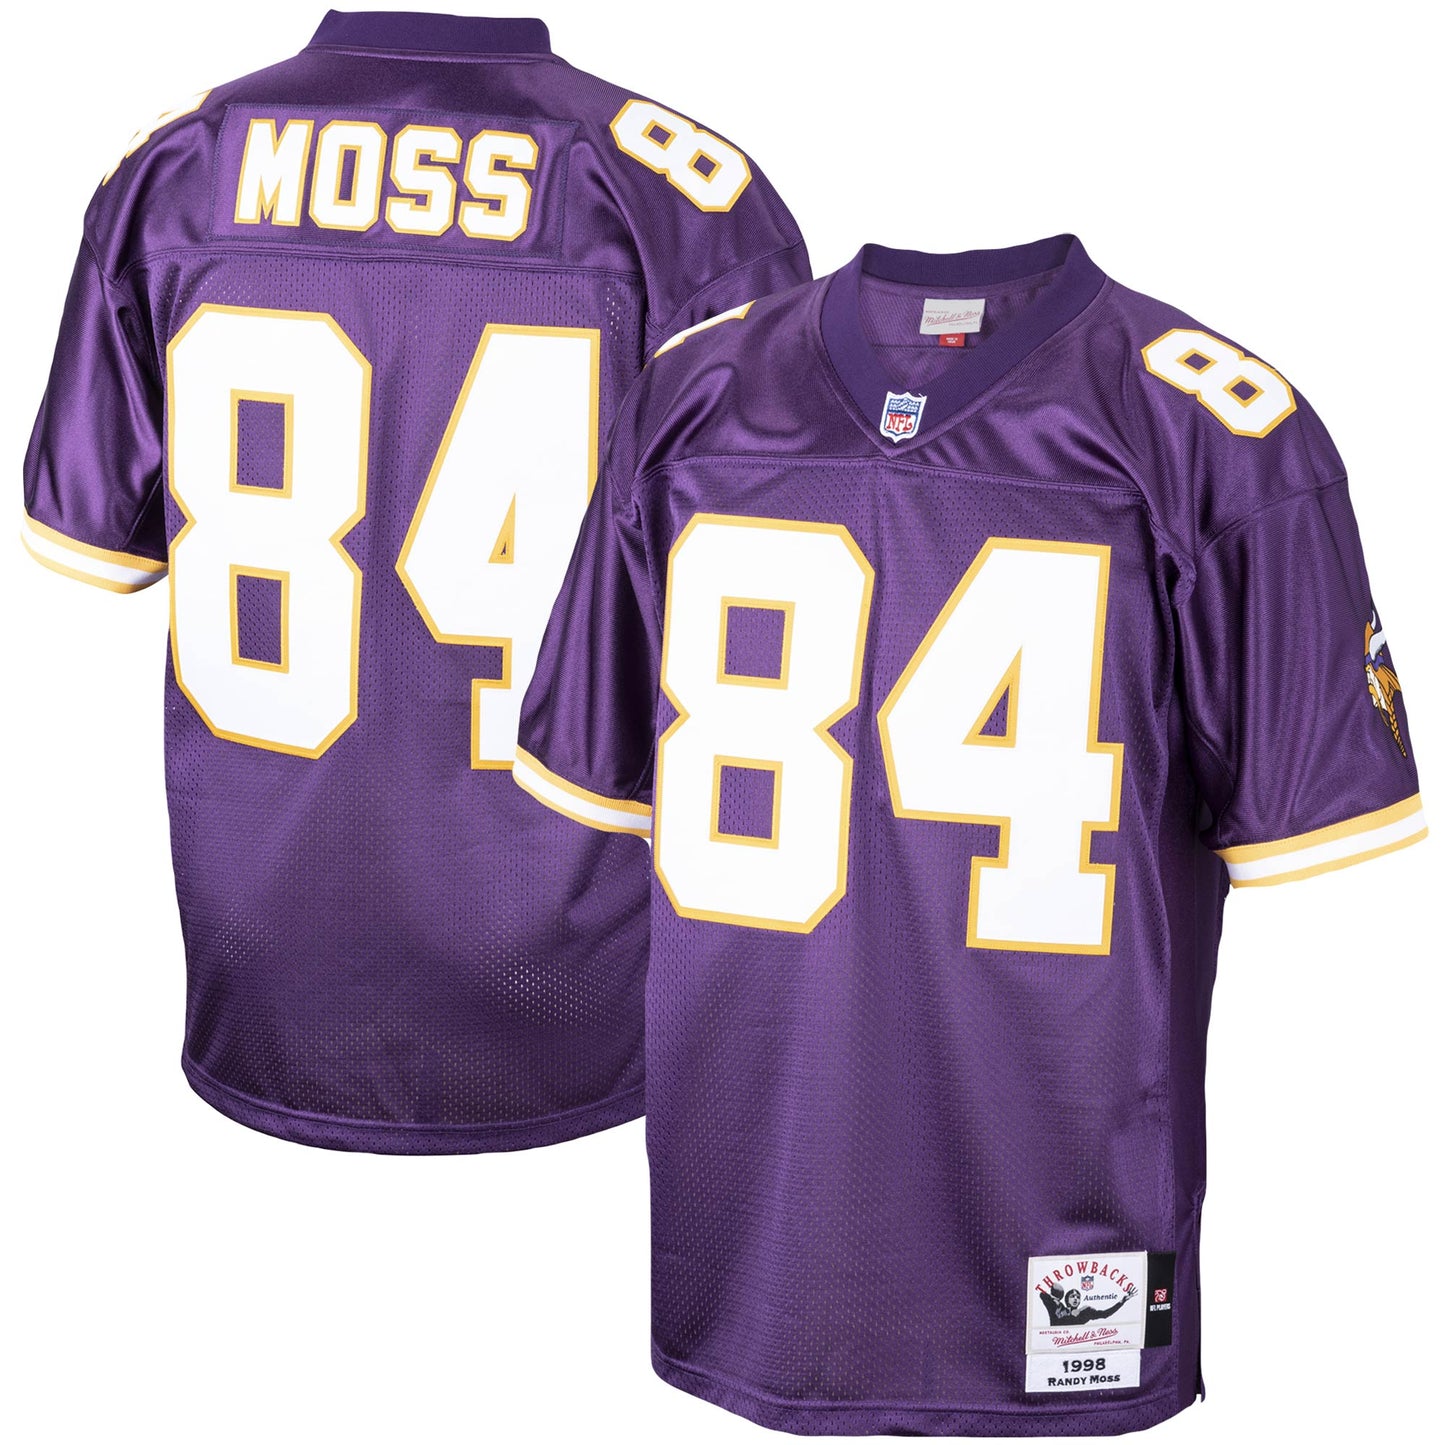 Randy Moss Minnesota Vikings Mitchell & Ness 1998 Authentic Throwback Retired Player Jersey - Purple